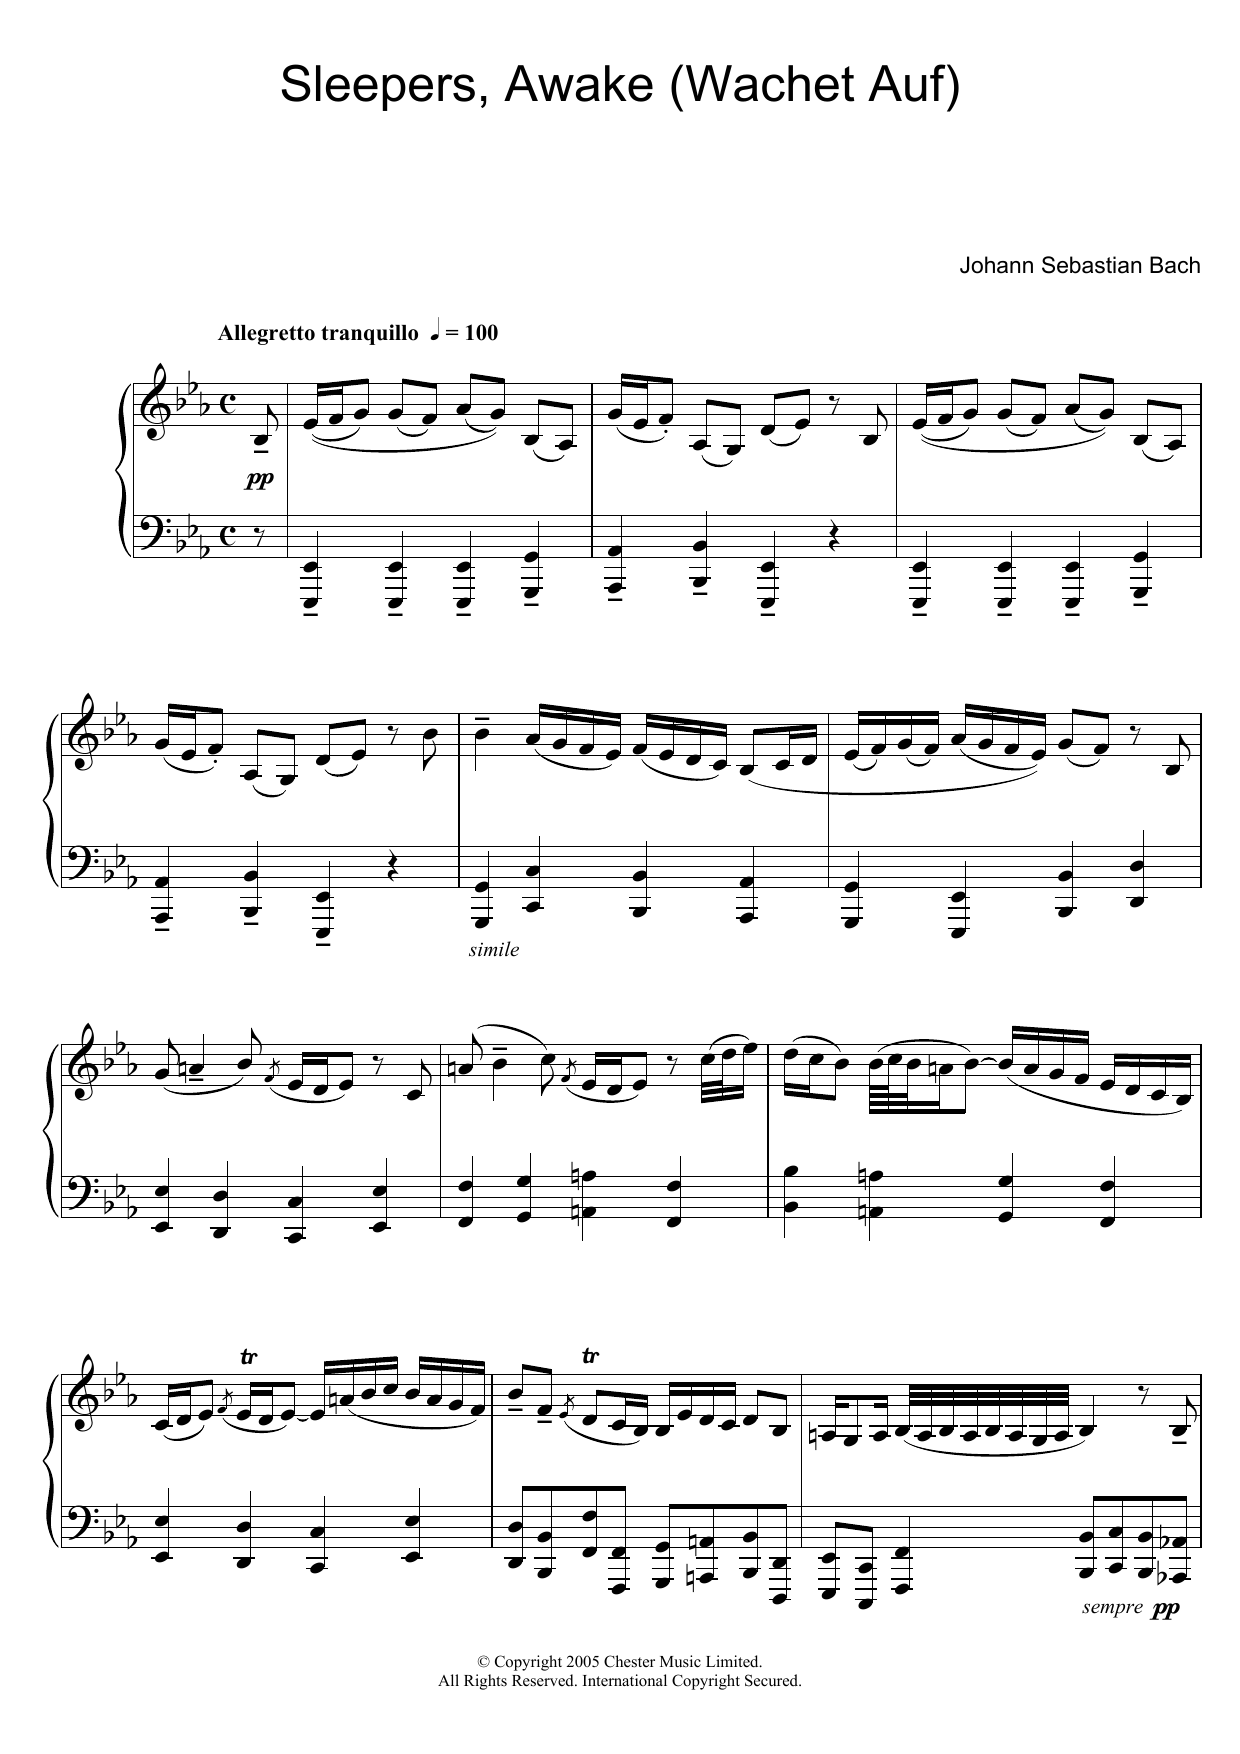 Johann Sebastian Bach Sleepers, Awake (Wachet Auf) Sheet Music Notes & Chords for Cello - Download or Print PDF